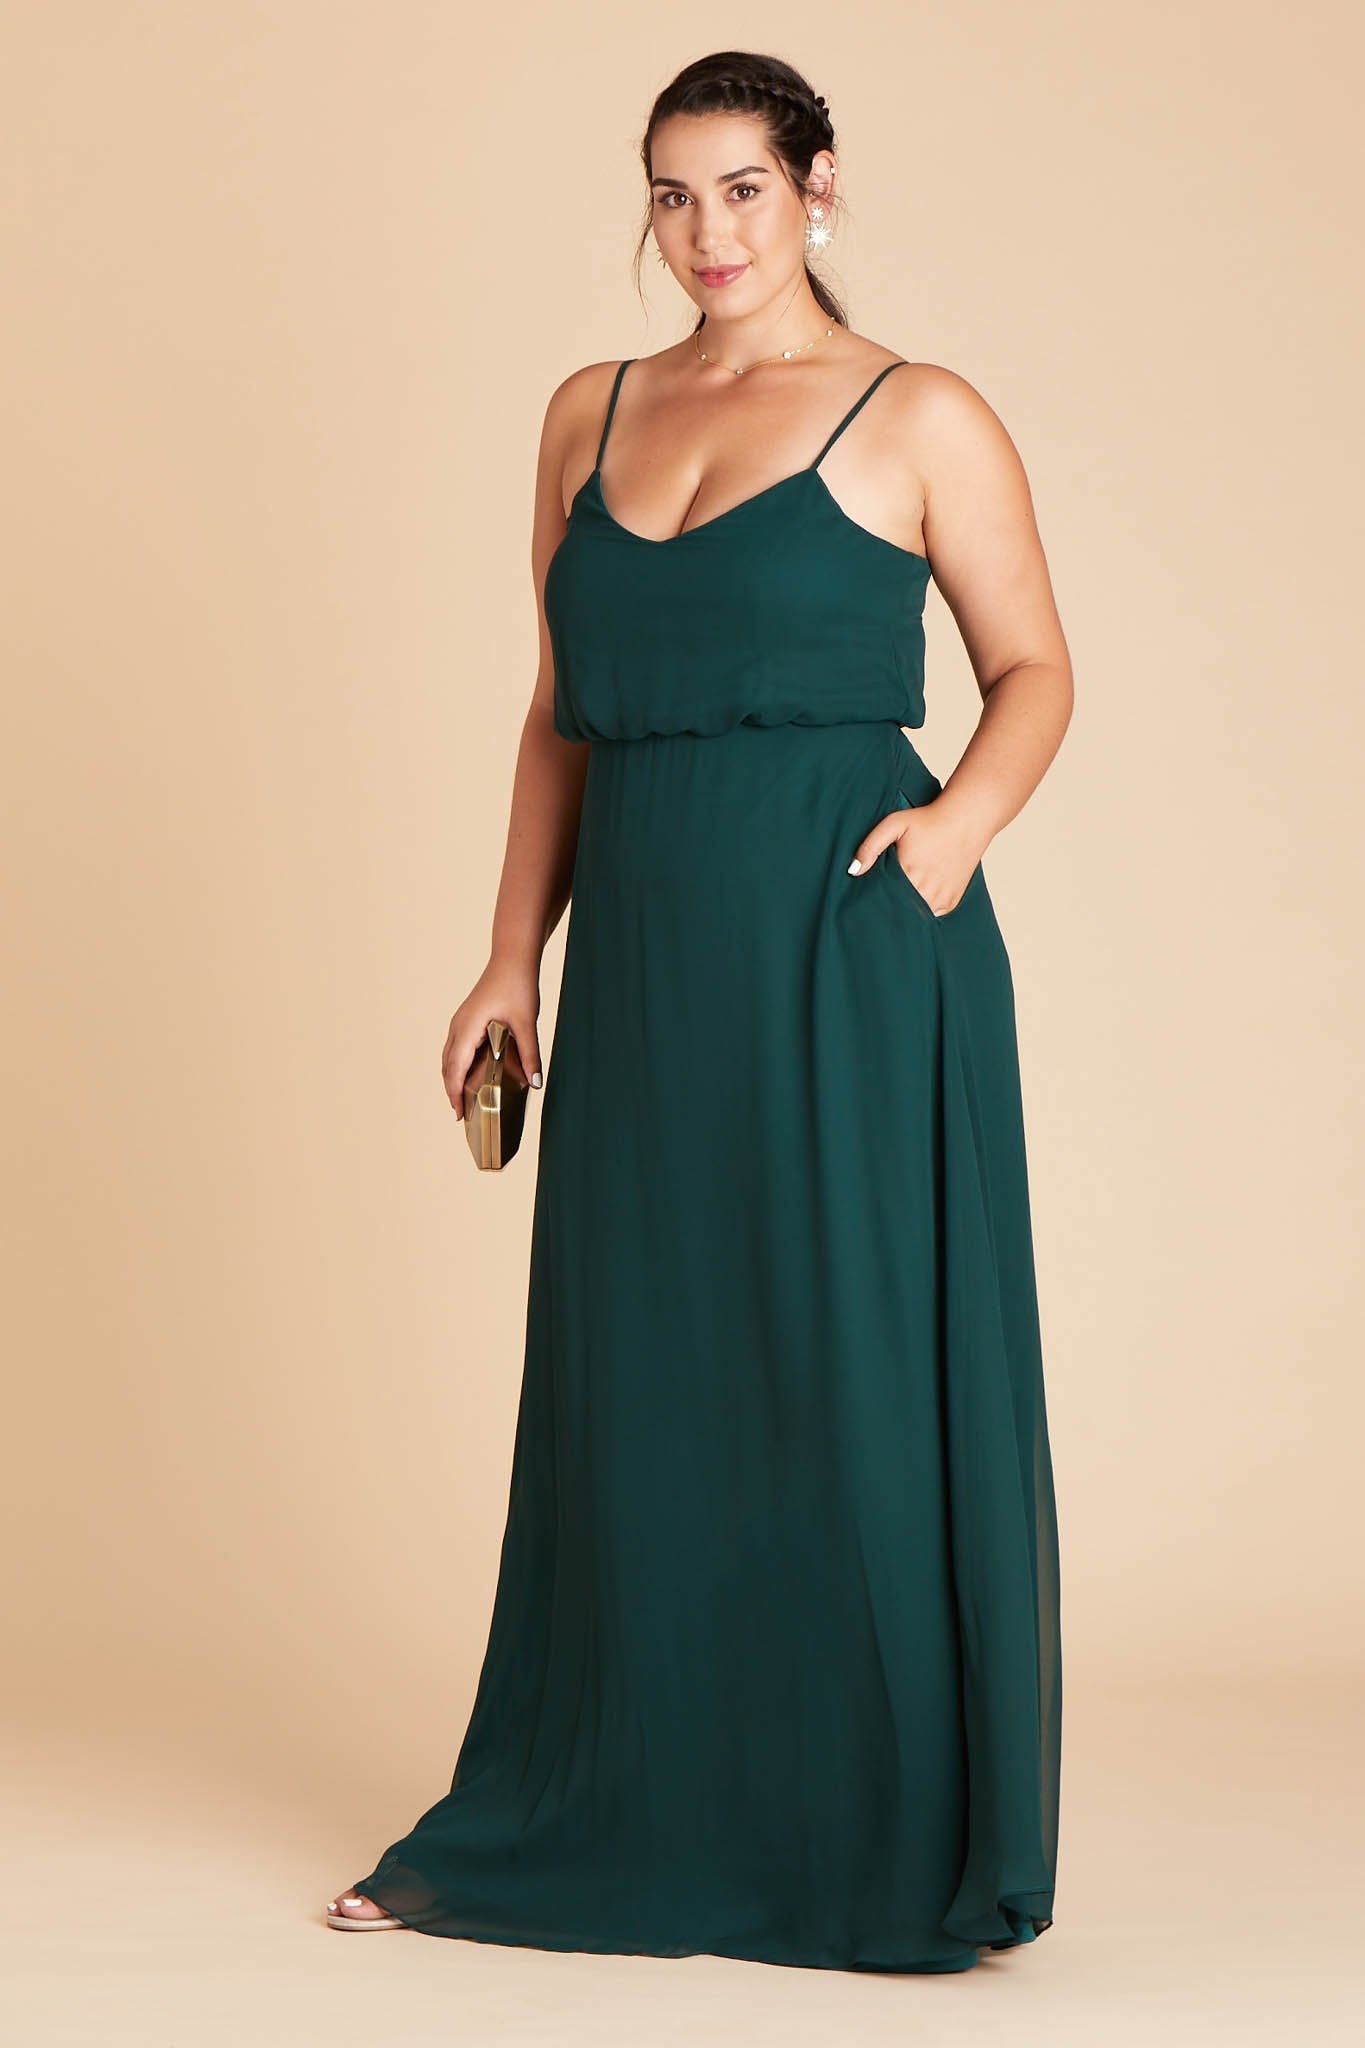 Gwennie plus size bridesmaid dress in emerald green chiffon by Birdy Grey, side view with hand in pocket